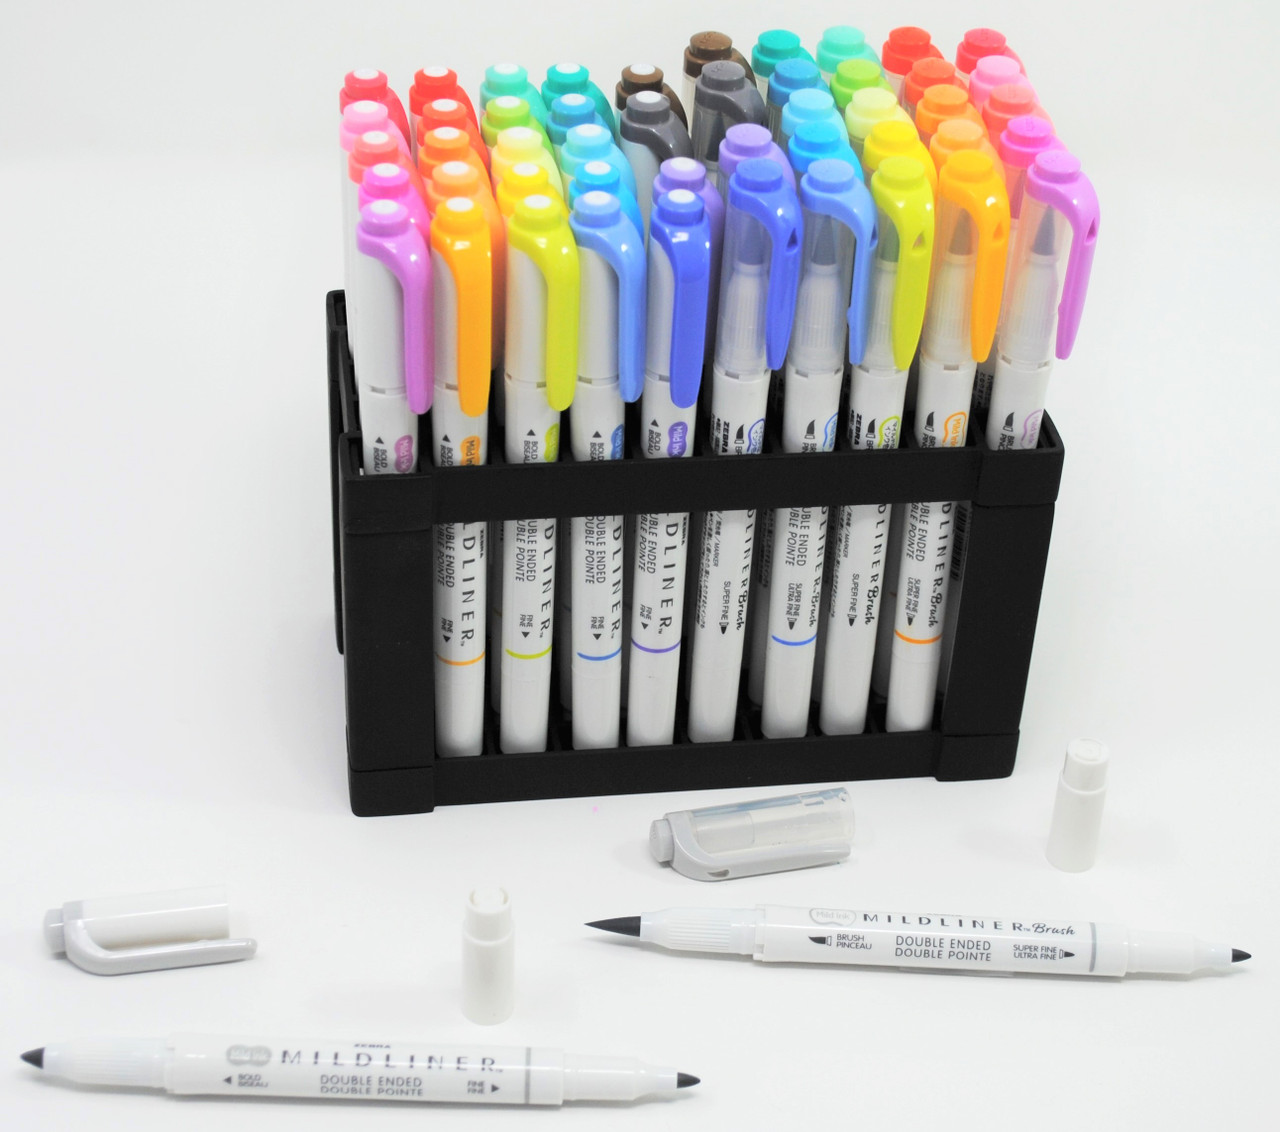 Zebra Mildliner Brush Pen 25 Set Assorted